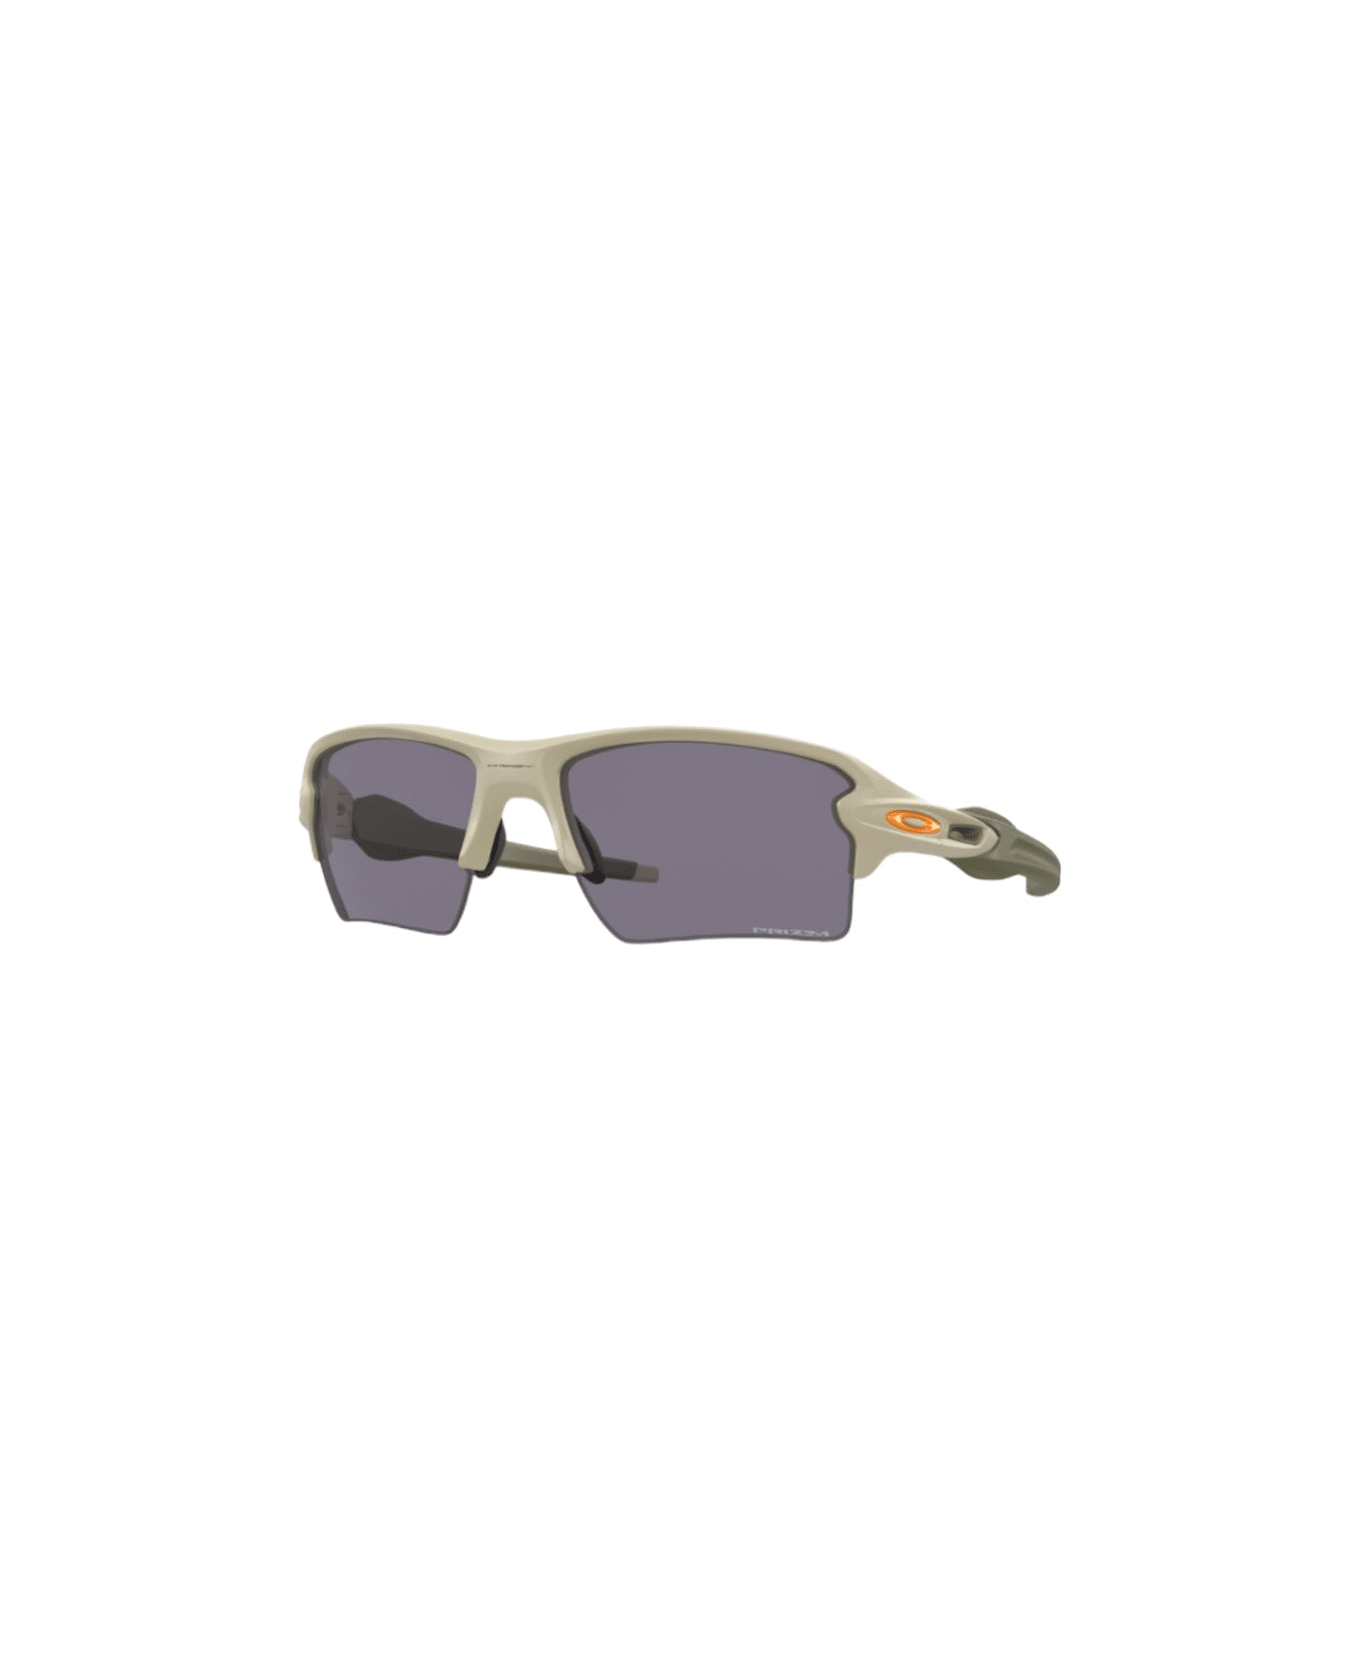 Oakley Flak 2.0 Xl - 9188 Sunglasses サングラス